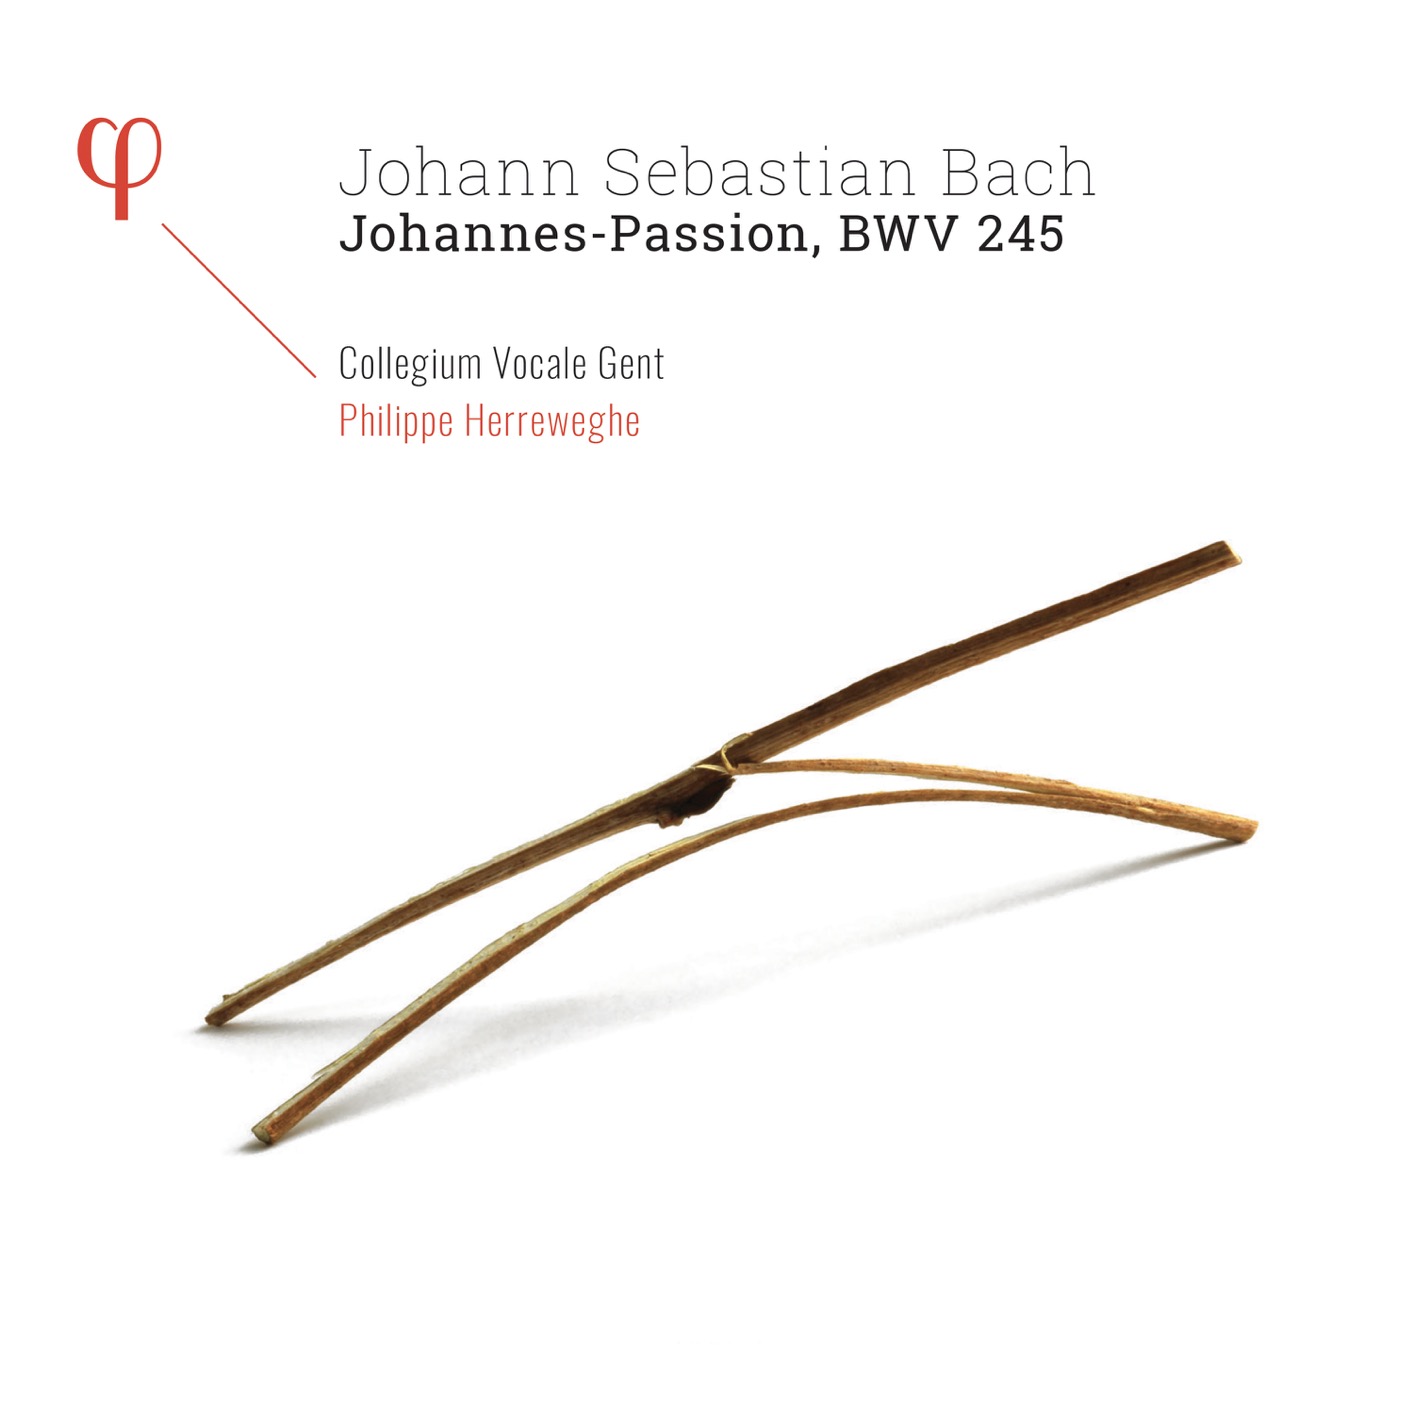 Collegium Vocale Gent, Philippe Herreweghe - Bach: Johannes-Passion, BWV 245 (2020) [FLAC 24bit/48kHz]